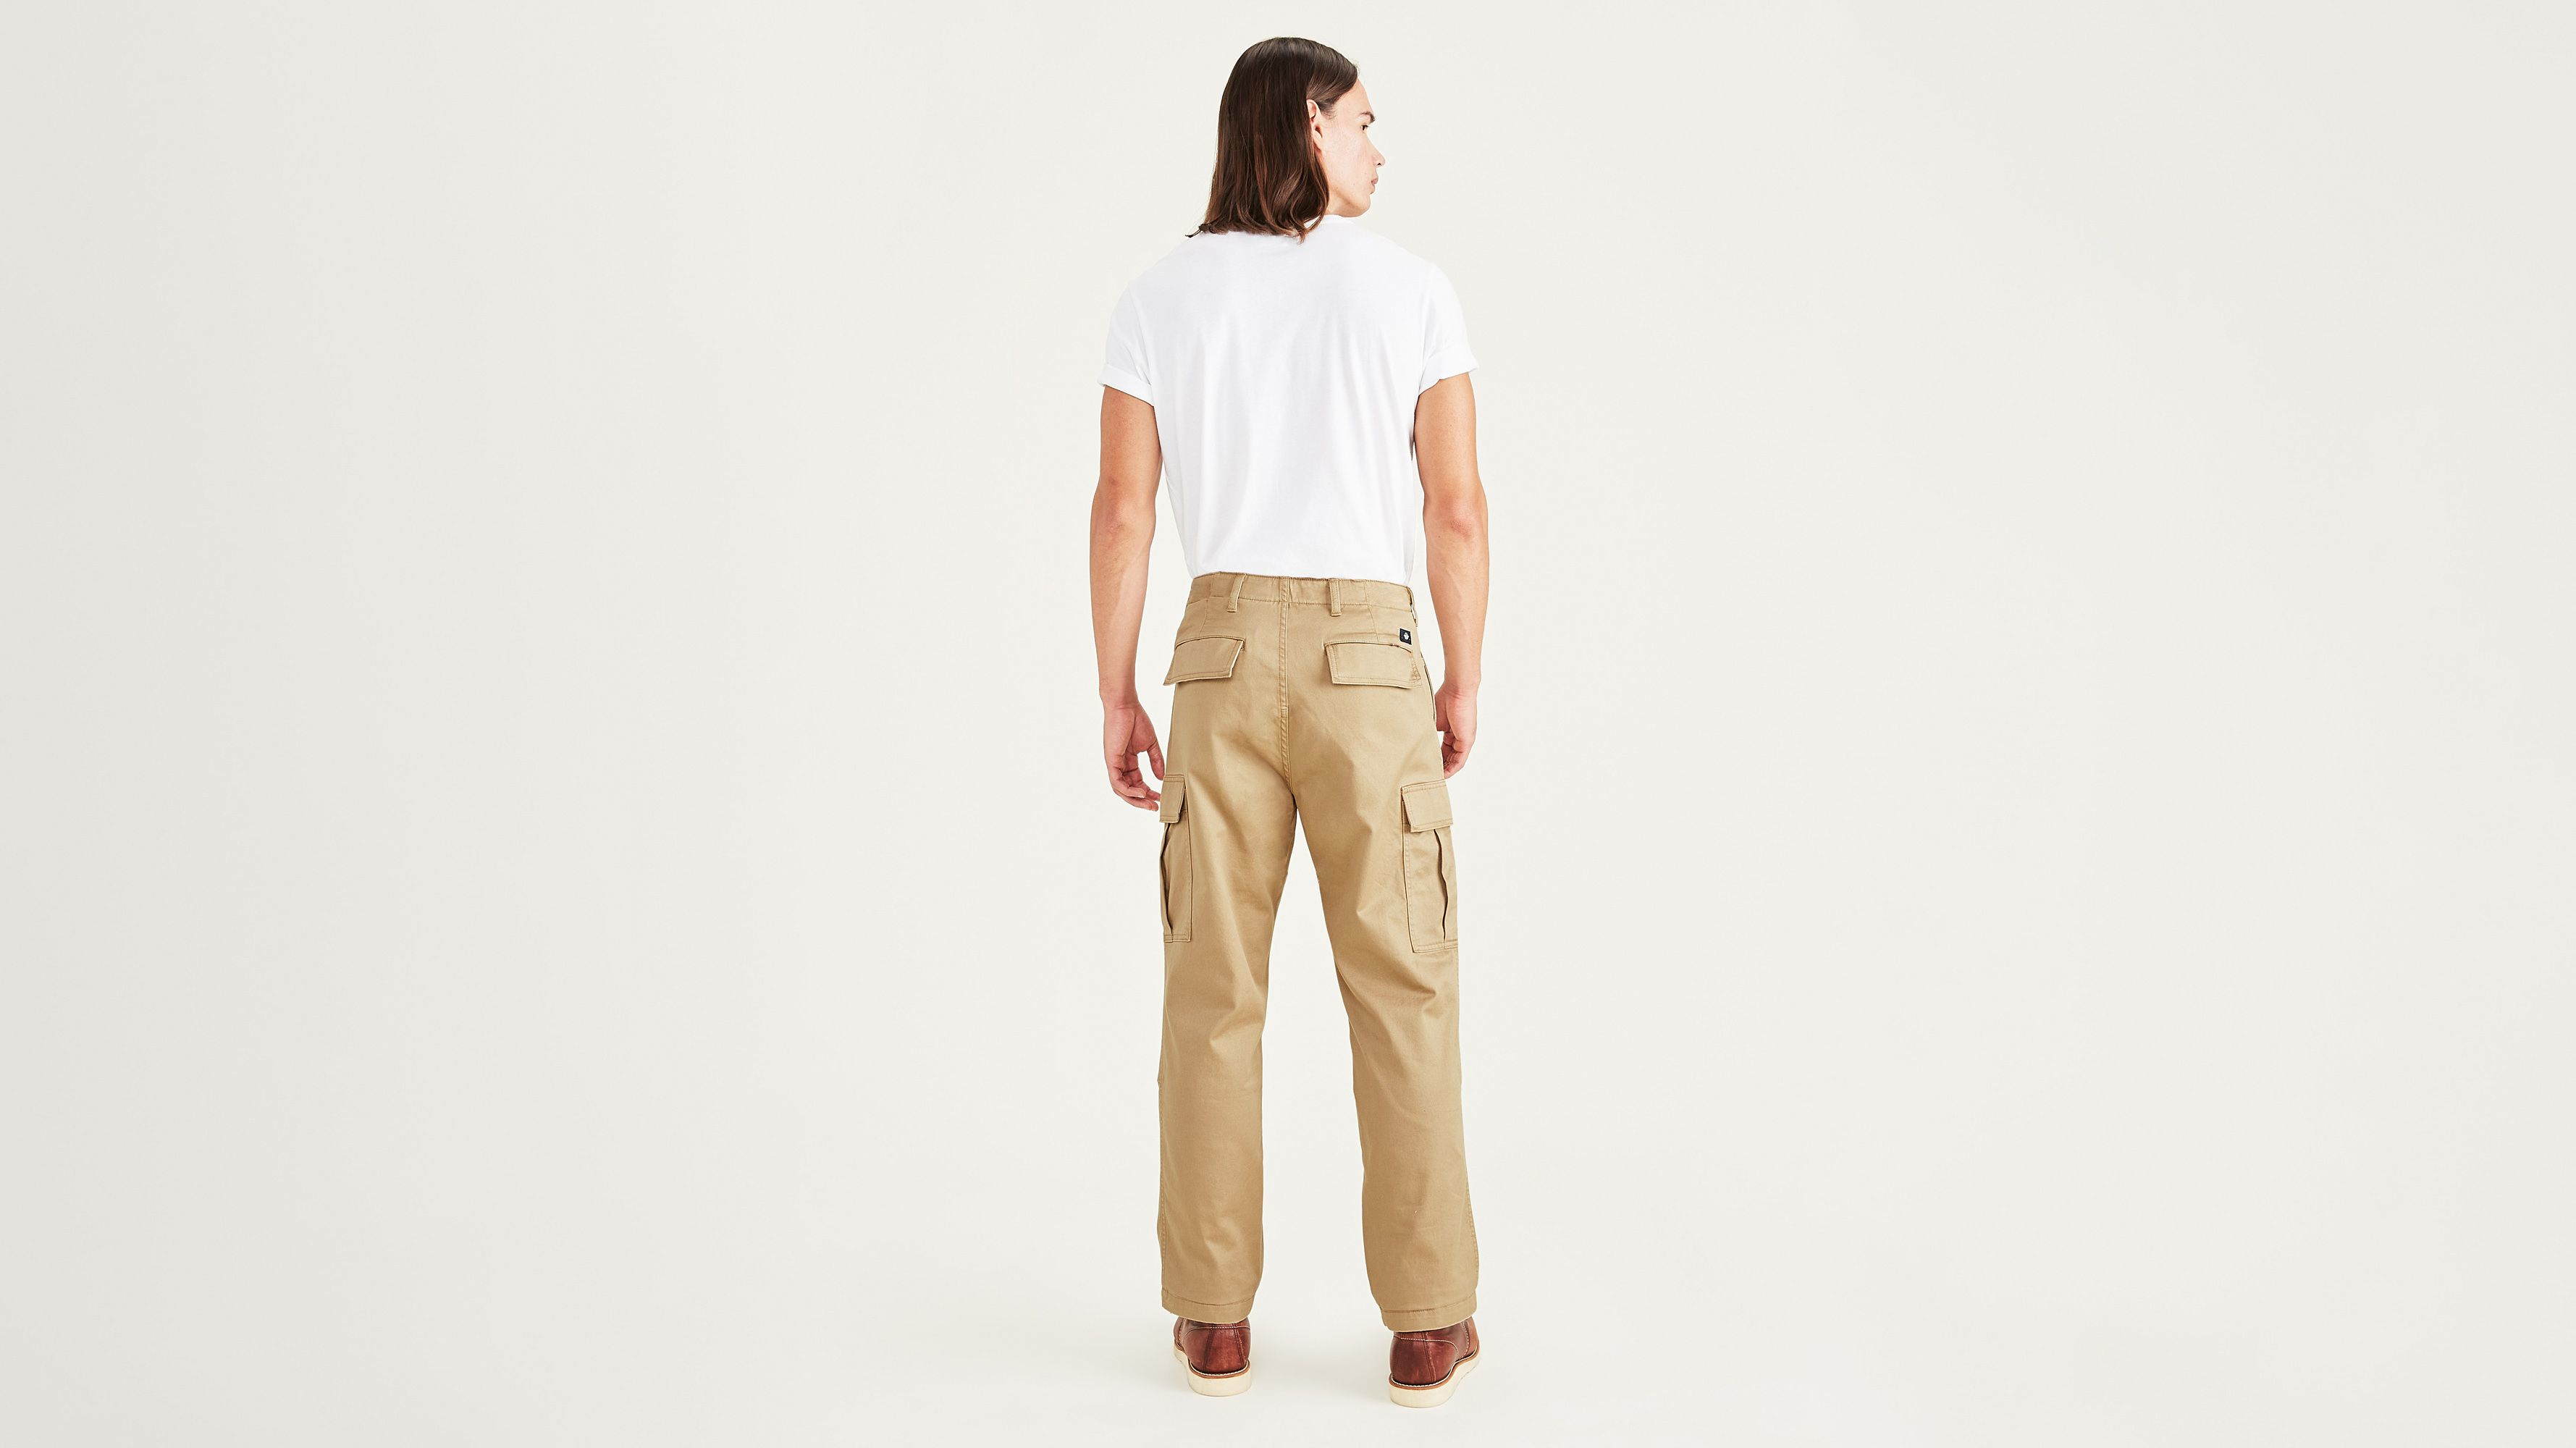 Men's Tall Mason Semi-Relaxed Fit Chino Pants Marine Navy – American Tall